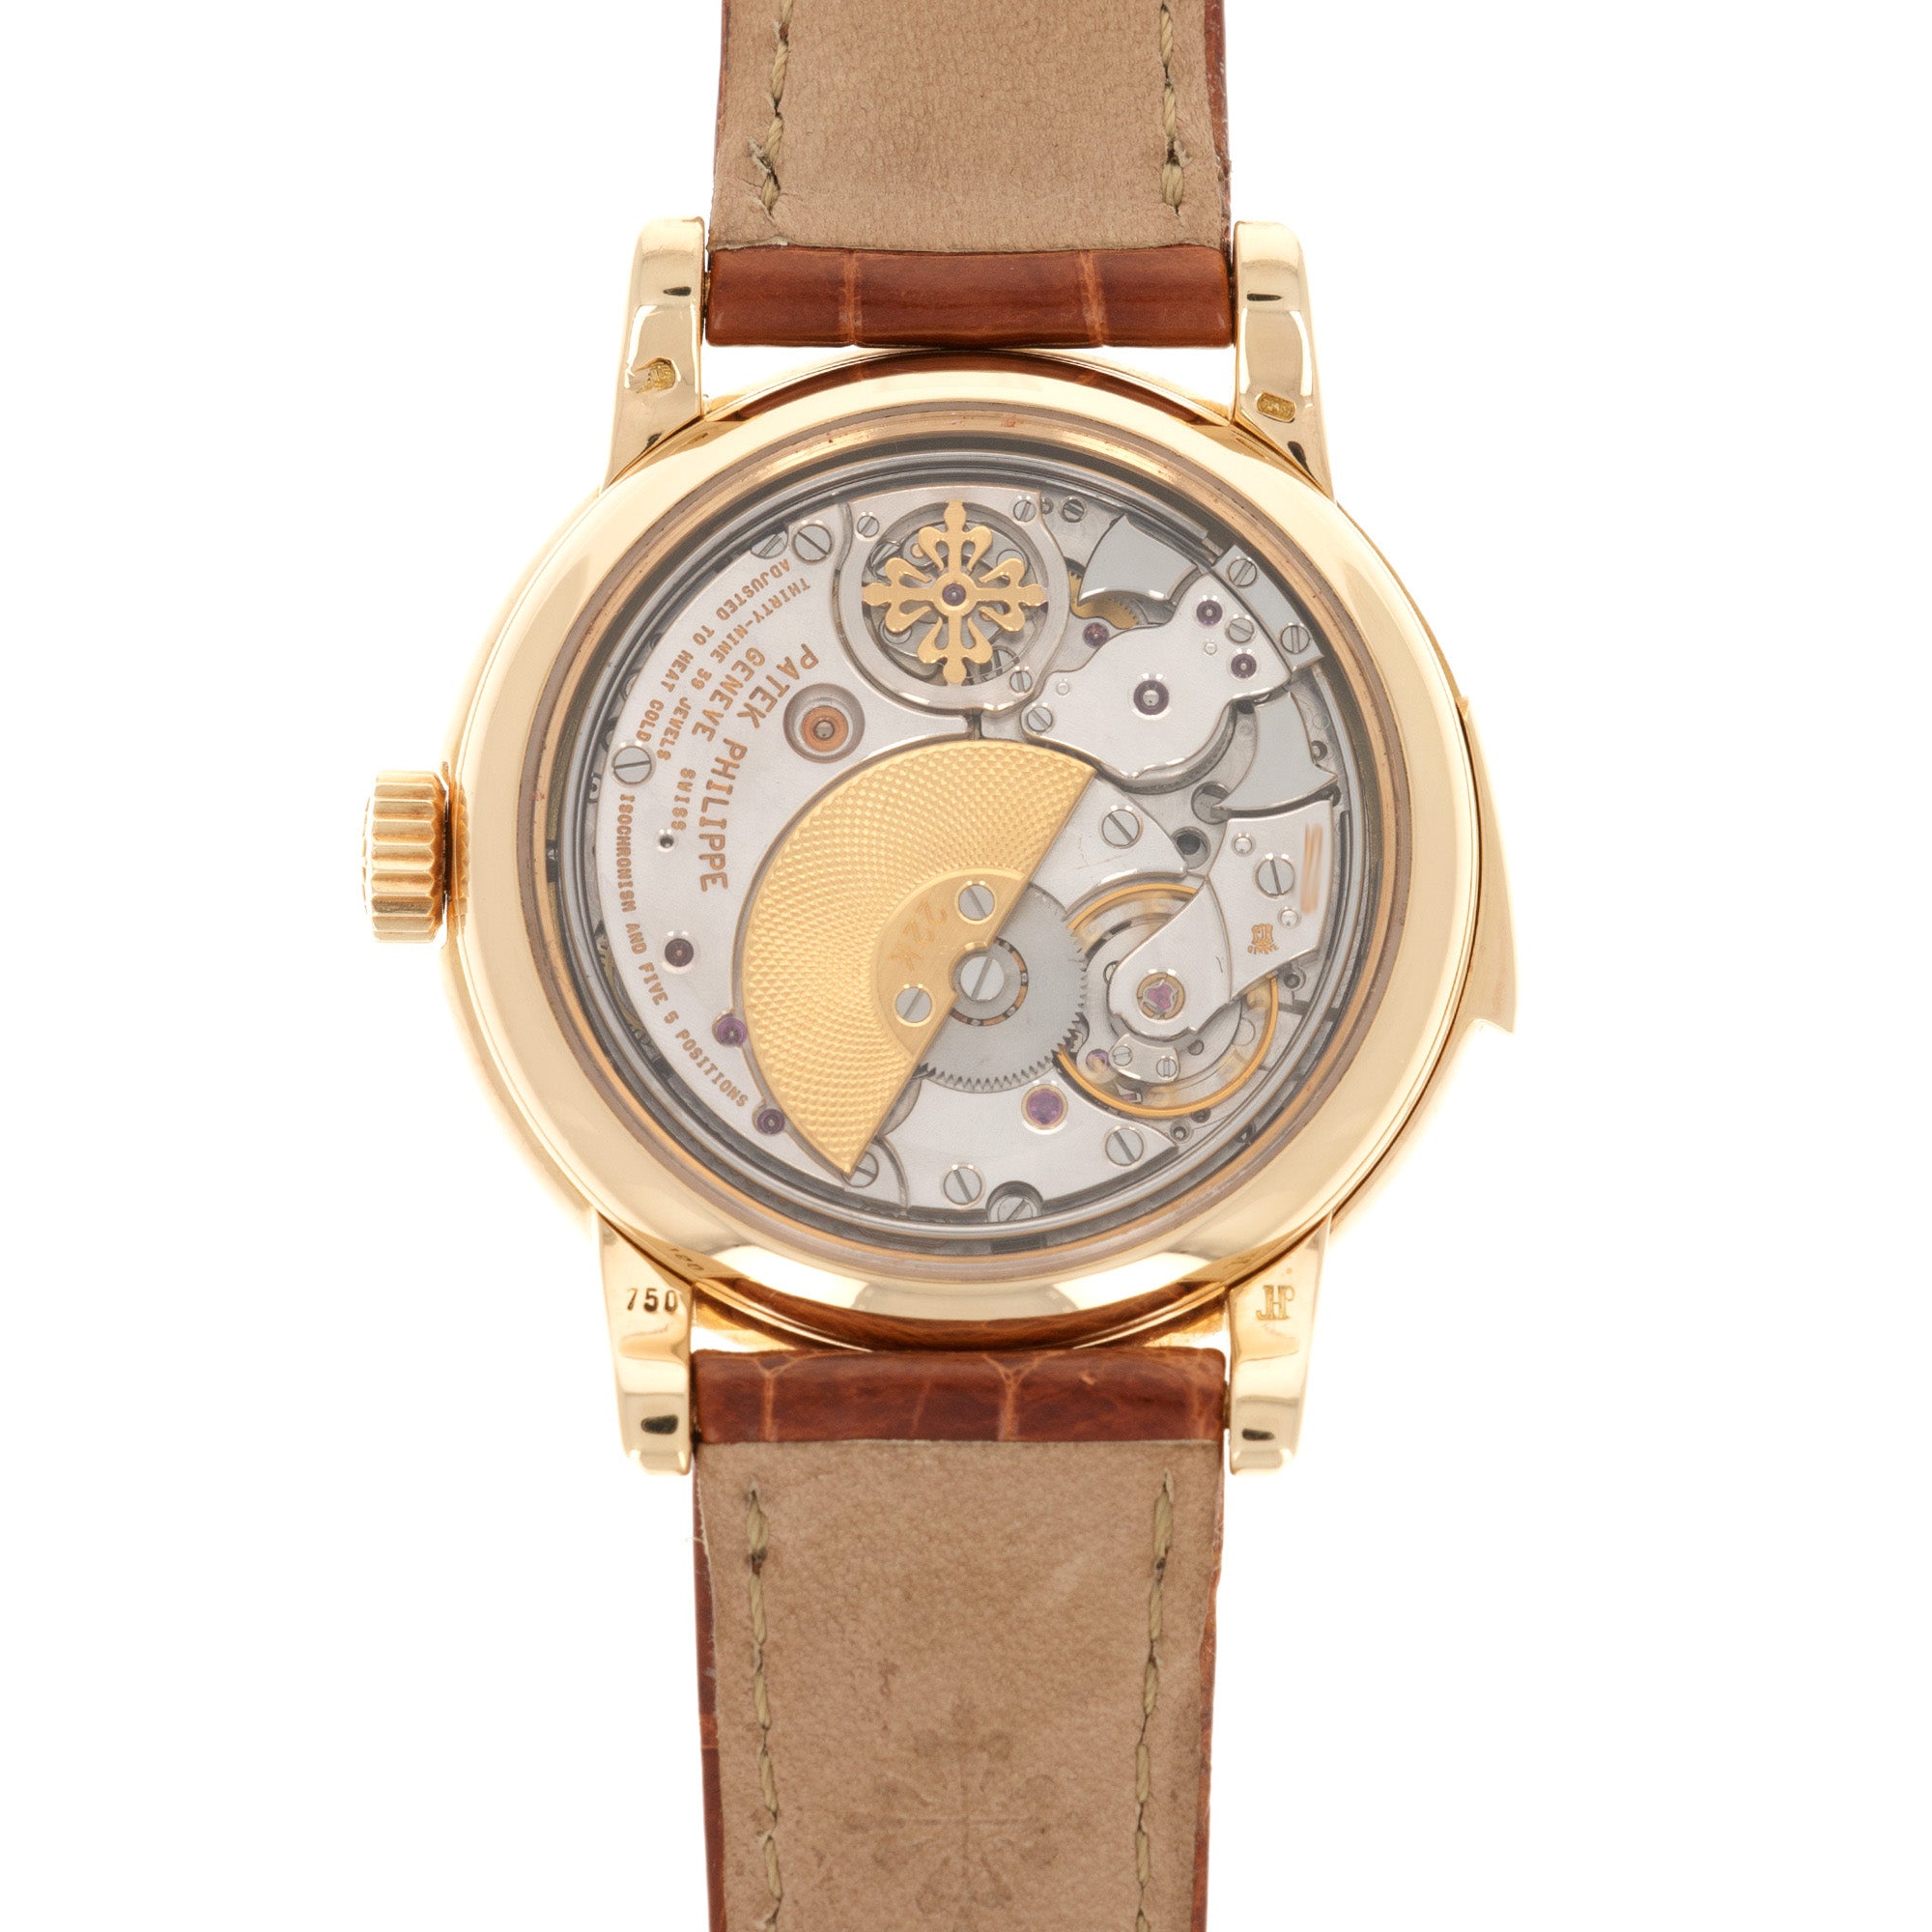 Patek Philippe - Patek Philippe Yellow Gold Perpetual Calendar Minute Repeater Watch Ref. 3974 - The Keystone Watches